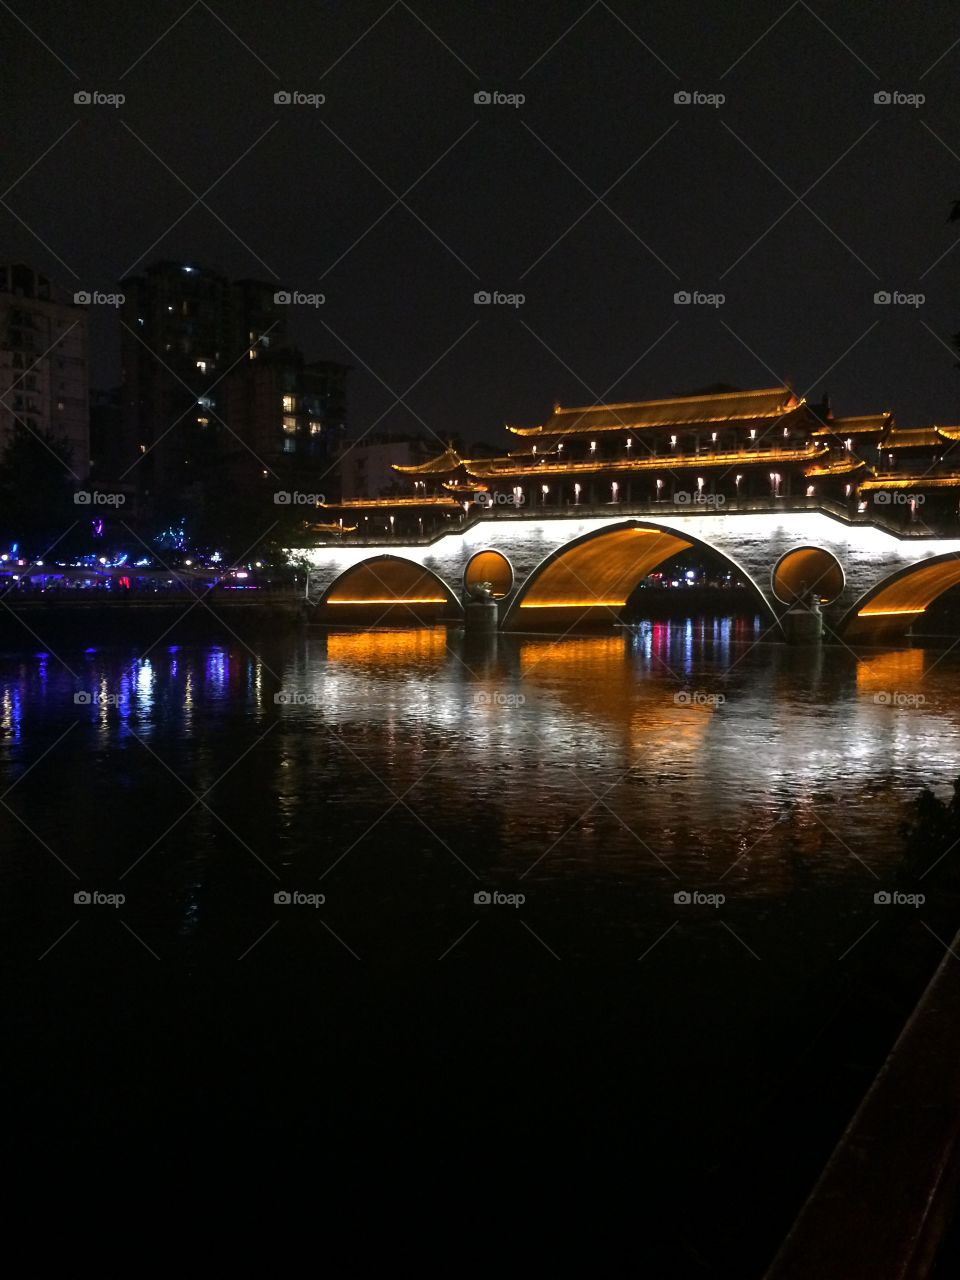 Famous Asian bridge illuminated at night with reflection